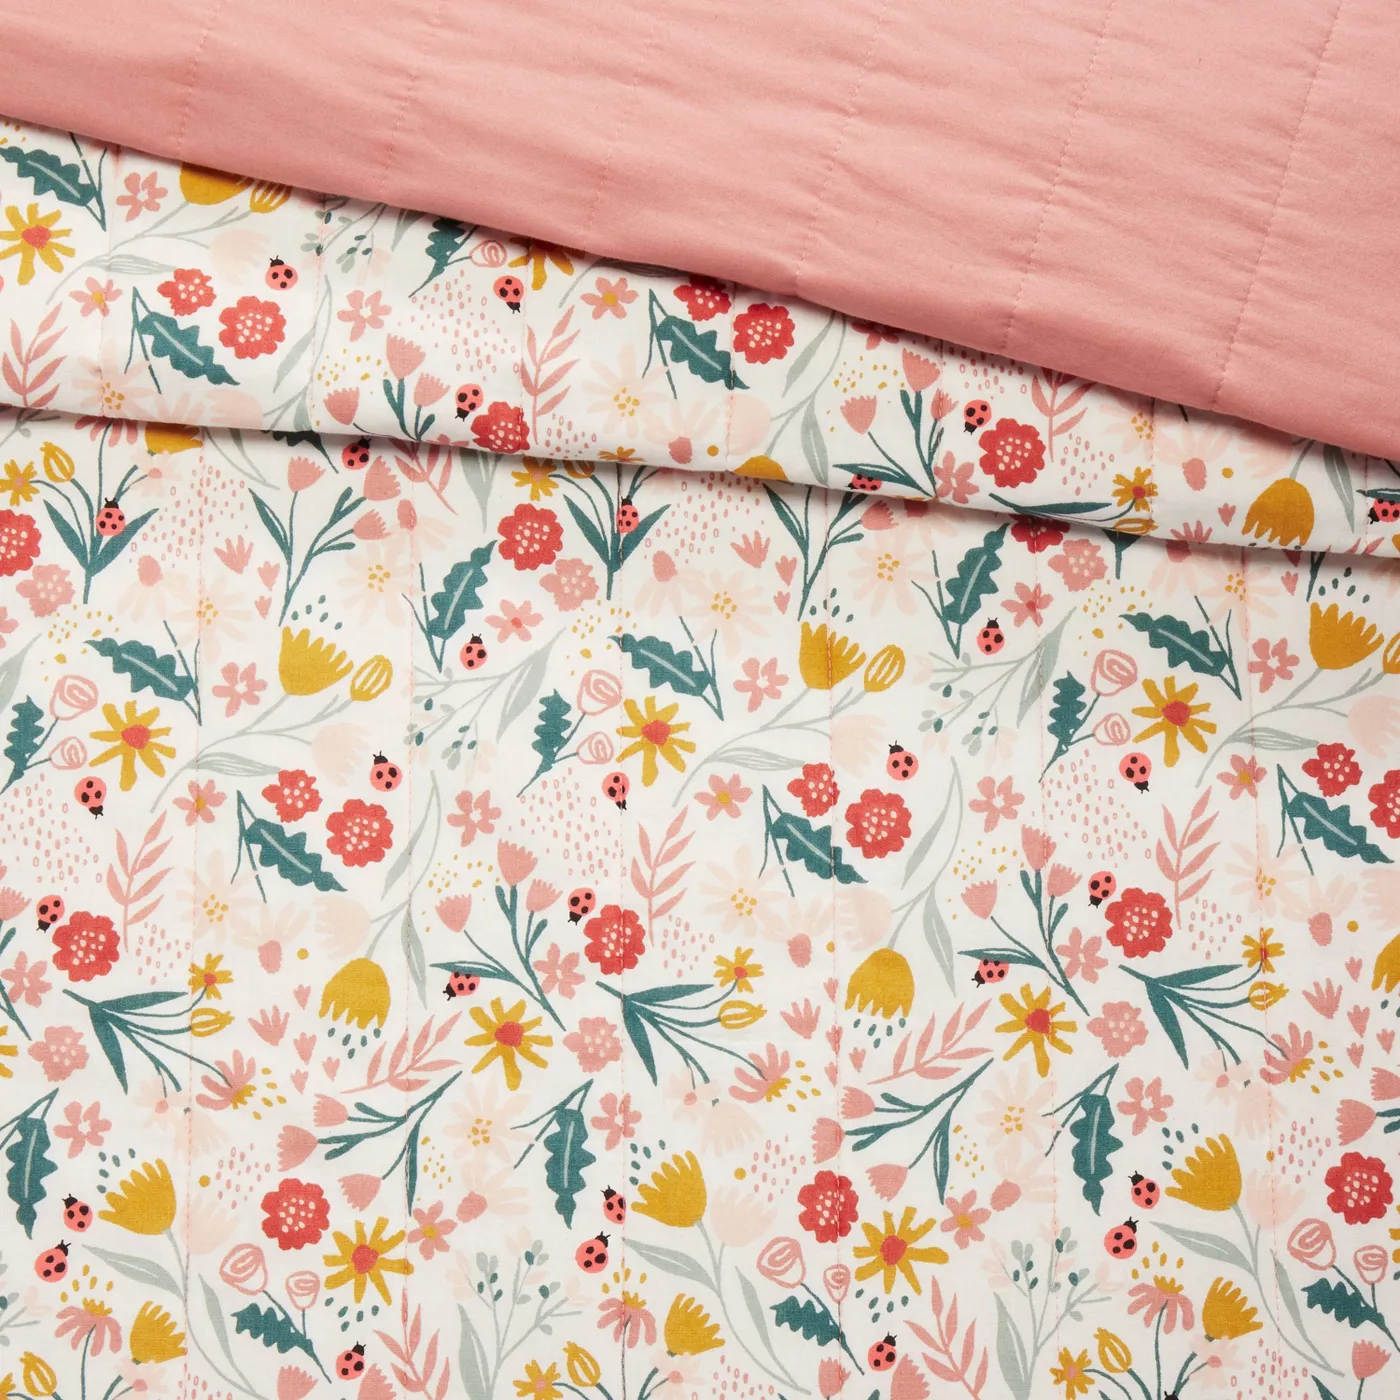 Garden Floral Cotton Quilt - Pillowfort™ - image 2 of 3